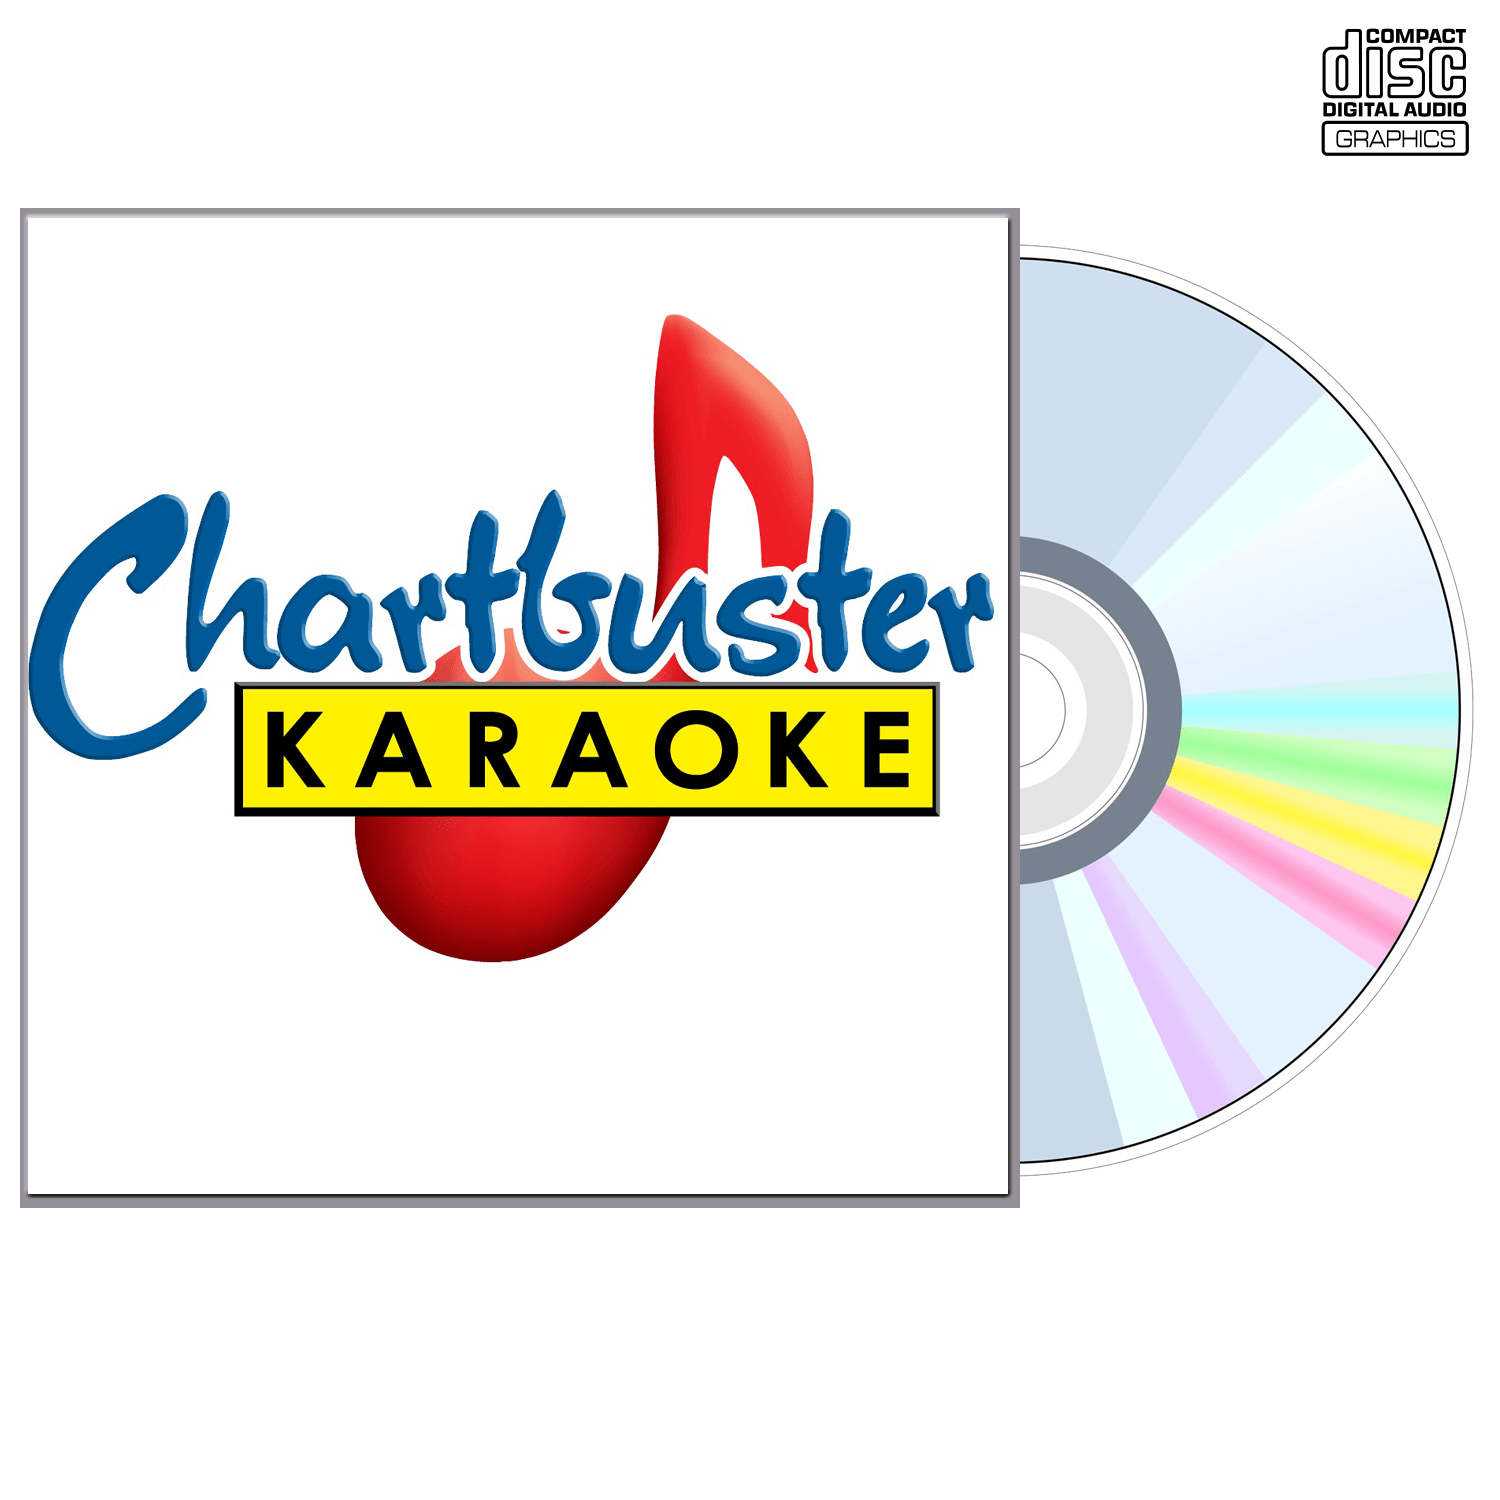 Brooks And Dunn Vol 1 - CD+G - Chartbuster Karaoke - Karaoke Home Entertainment